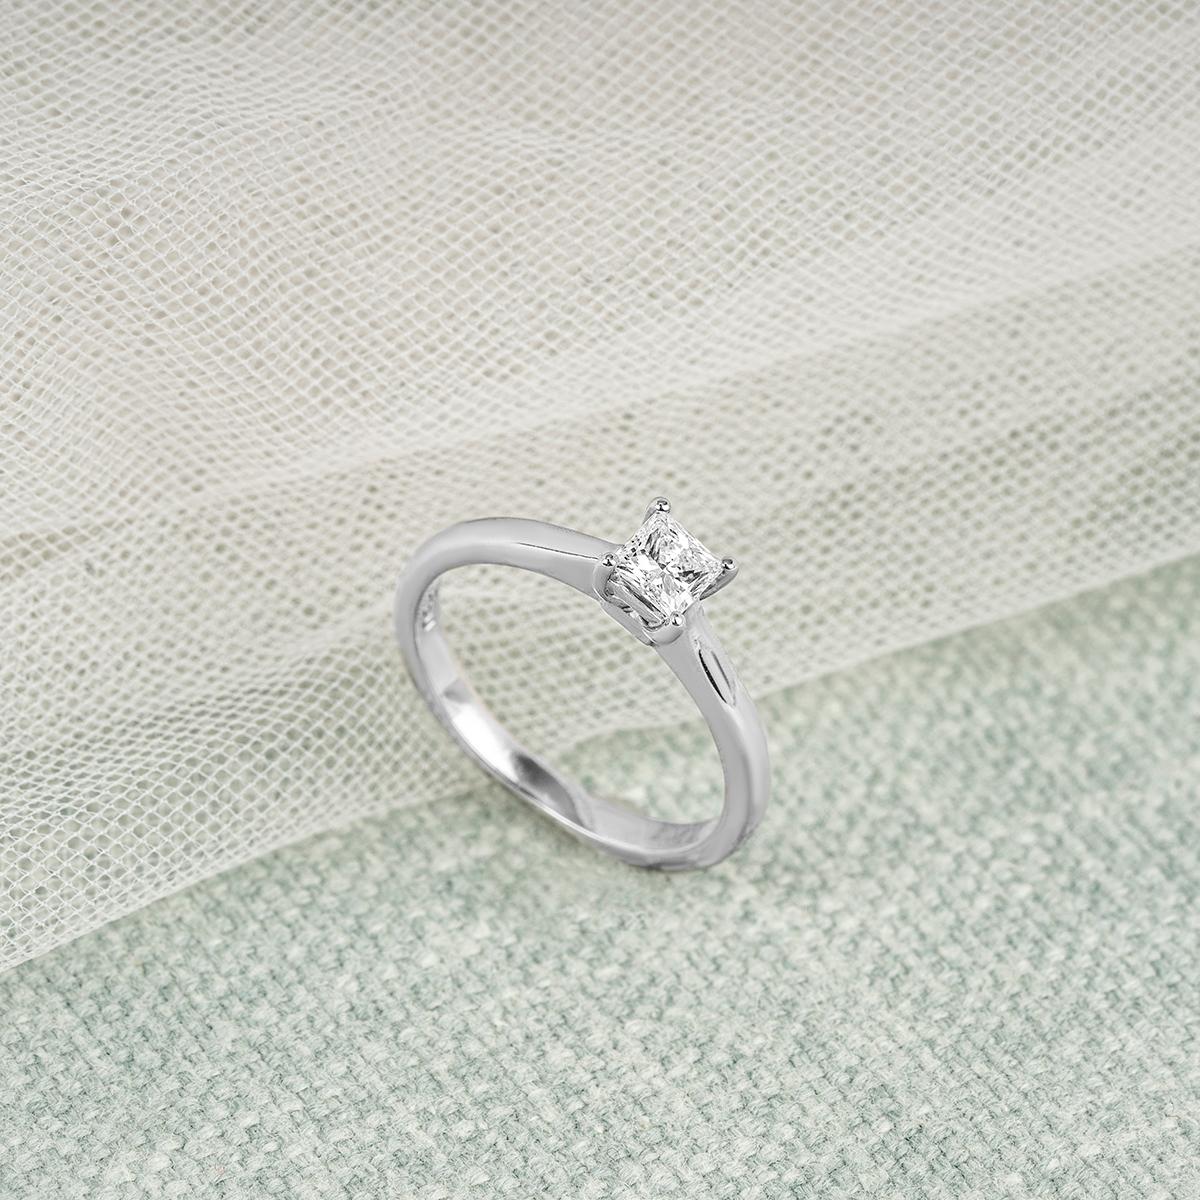 Women's White Gold Princess Cut Diamond Ring 0.30ct H/VS1 For Sale